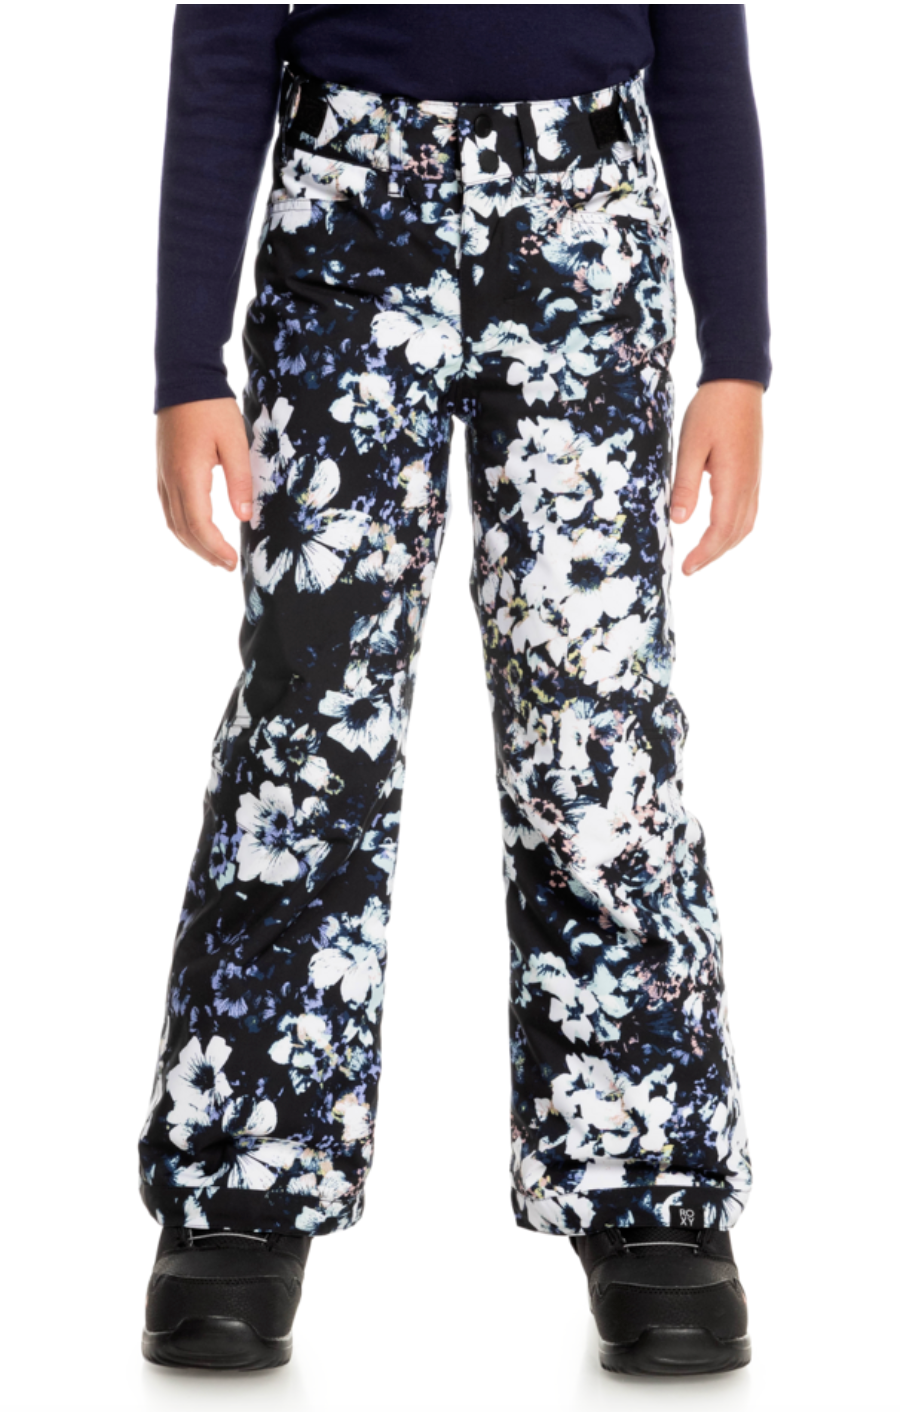 Roxy, Pants & Jumpsuits, Roxy Creek Short Snow Ski Pants In White For  Women